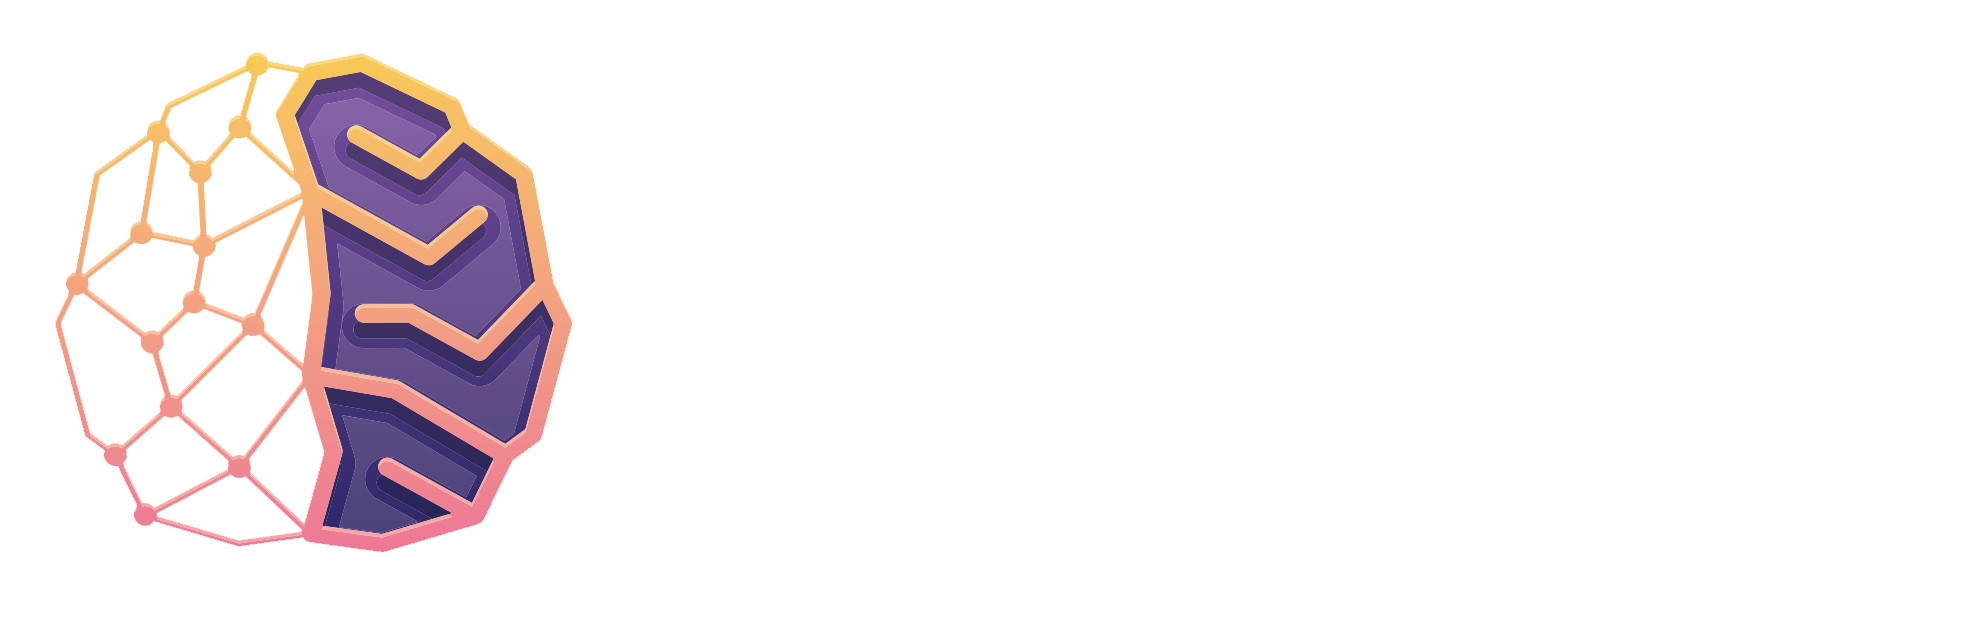 Smart Network الشبكة الذكية